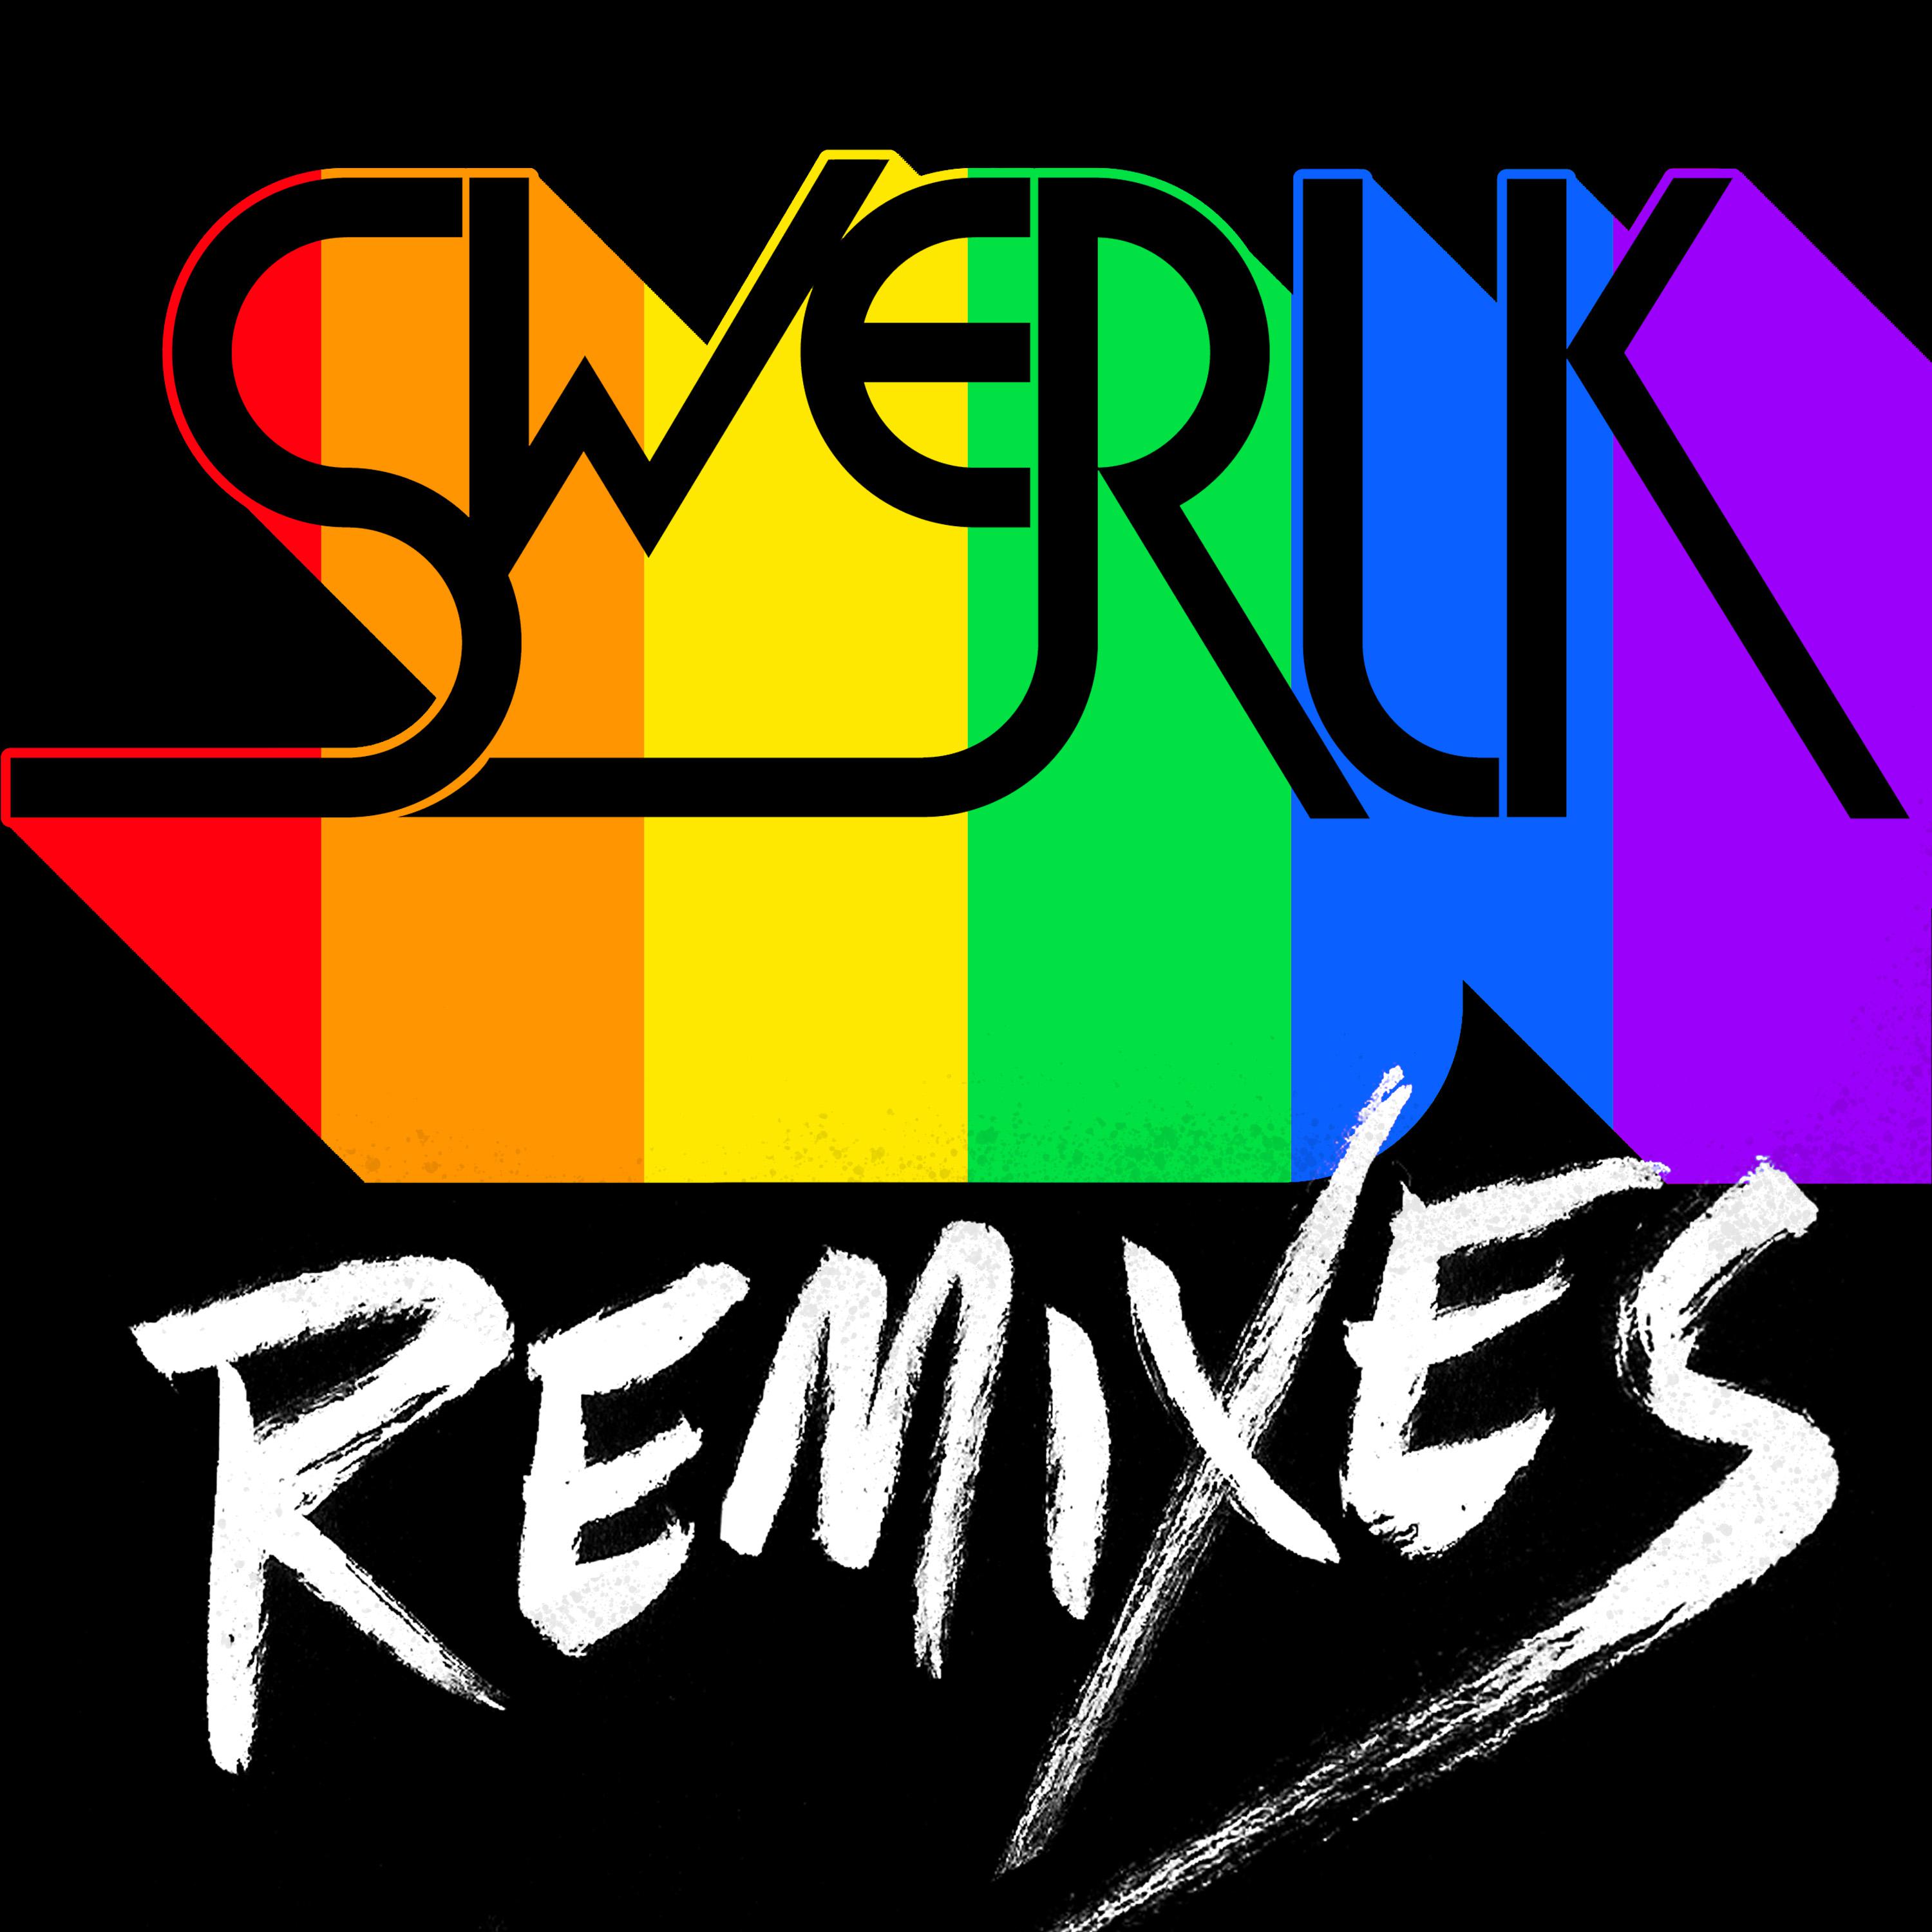 Scissor Sisters - SWERLK (Martin Sharp Remix)